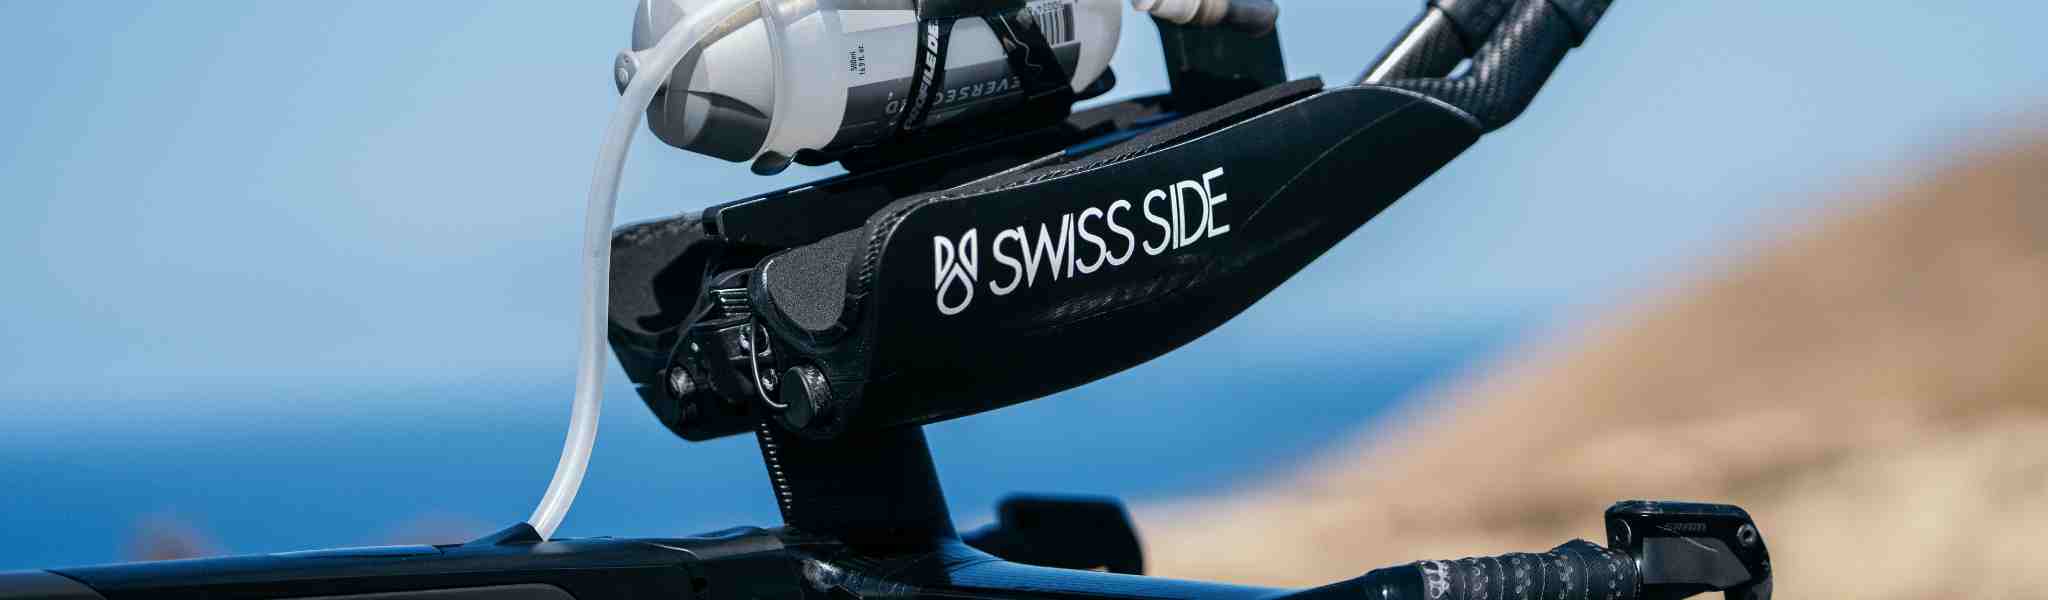 Swiss Side aerodynamic cockpit Lisa Norden Ironman World Championship 2023 Kona